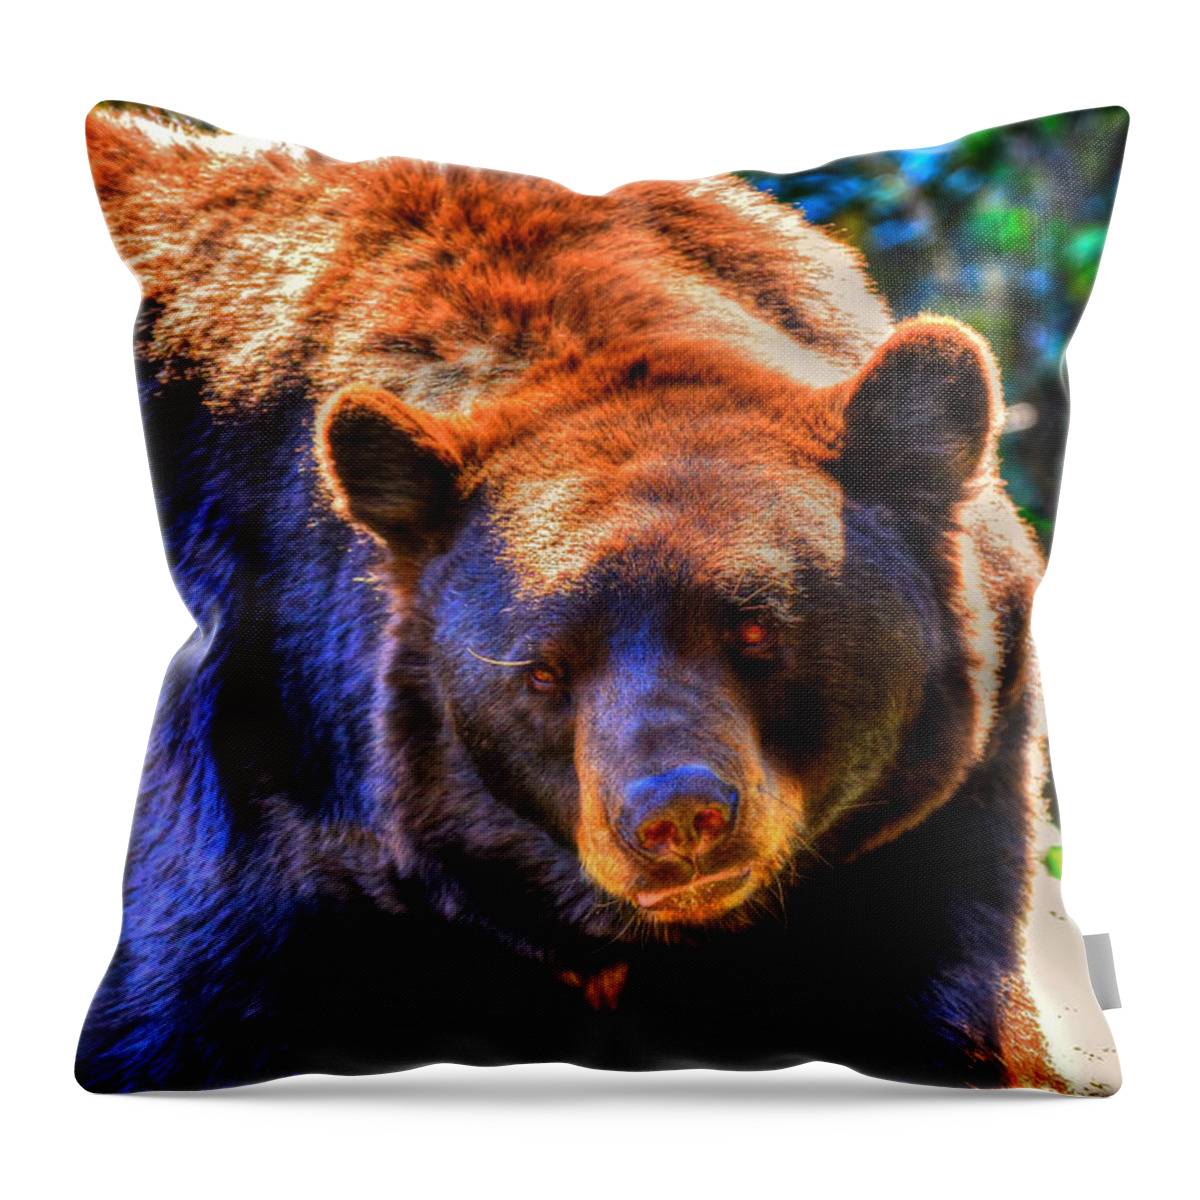 Black Bear Throw Pillow featuring the photograph A Curious Black Bear by Don Mercer